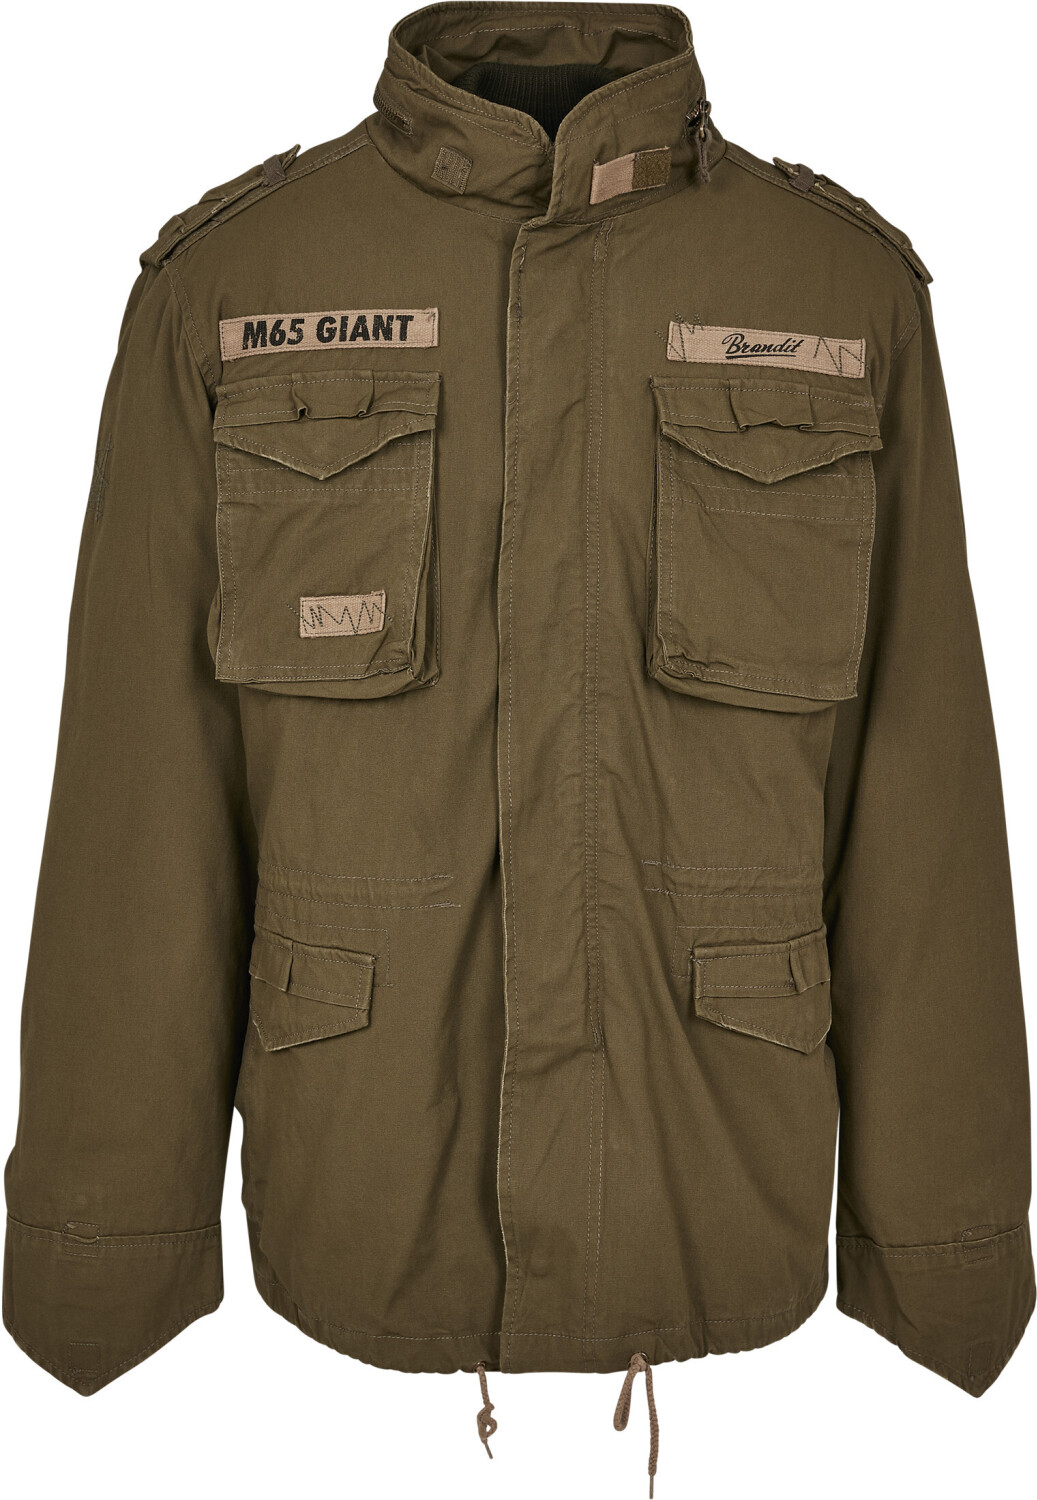 Veste Brandit M-65 Giant homme mode militaire Kaki / olive - Achat